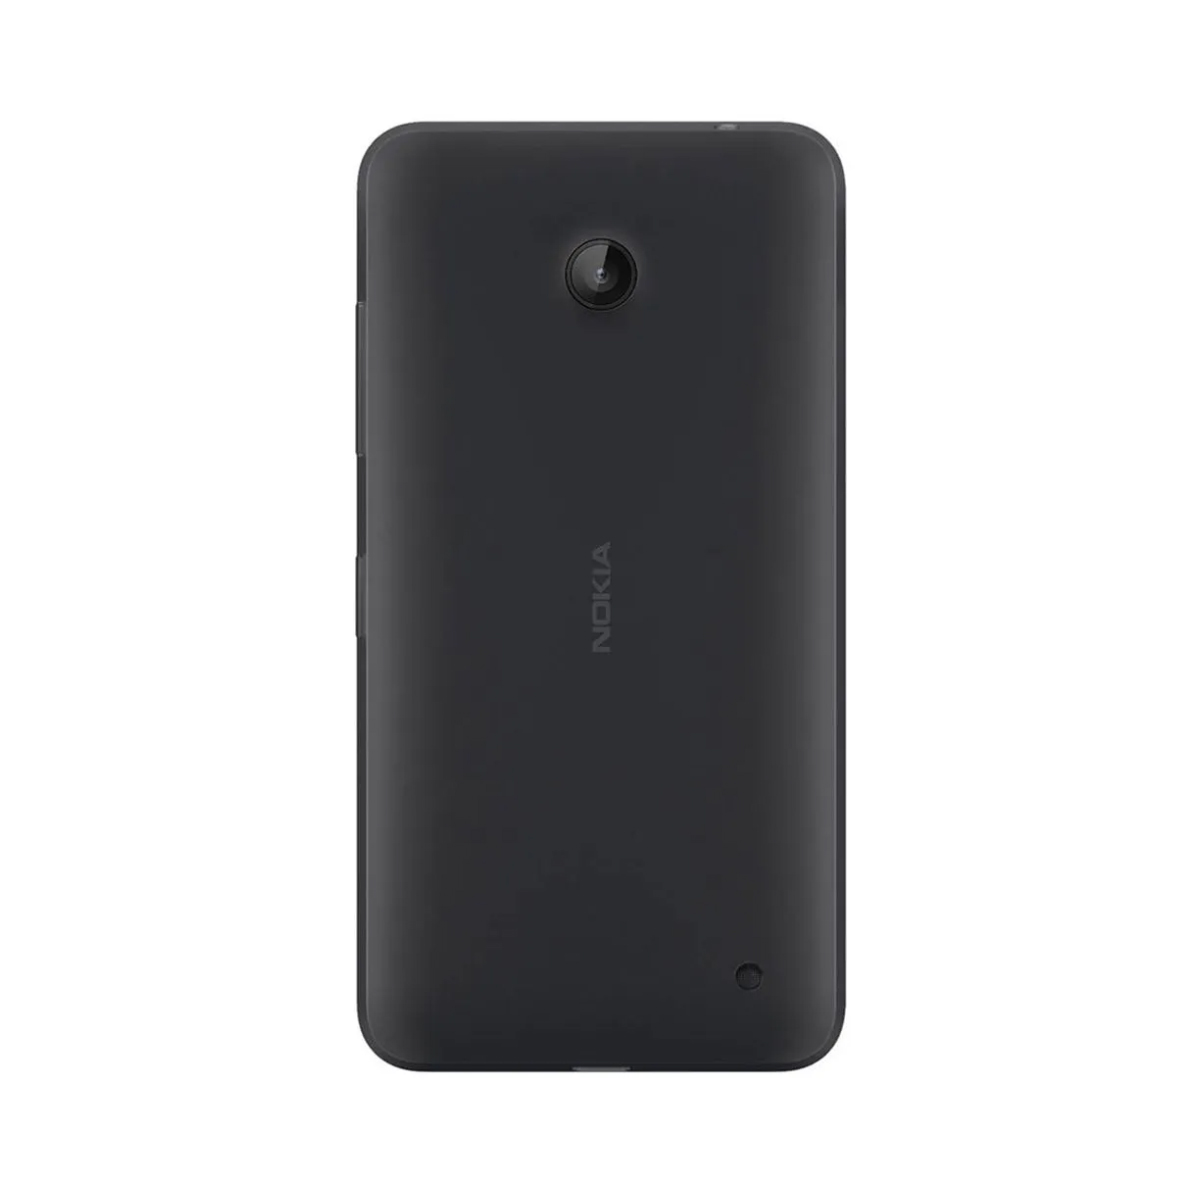 Celular Básico Nokia Lumia 635 8Gb Wi-Fi 4G Anatel Usado